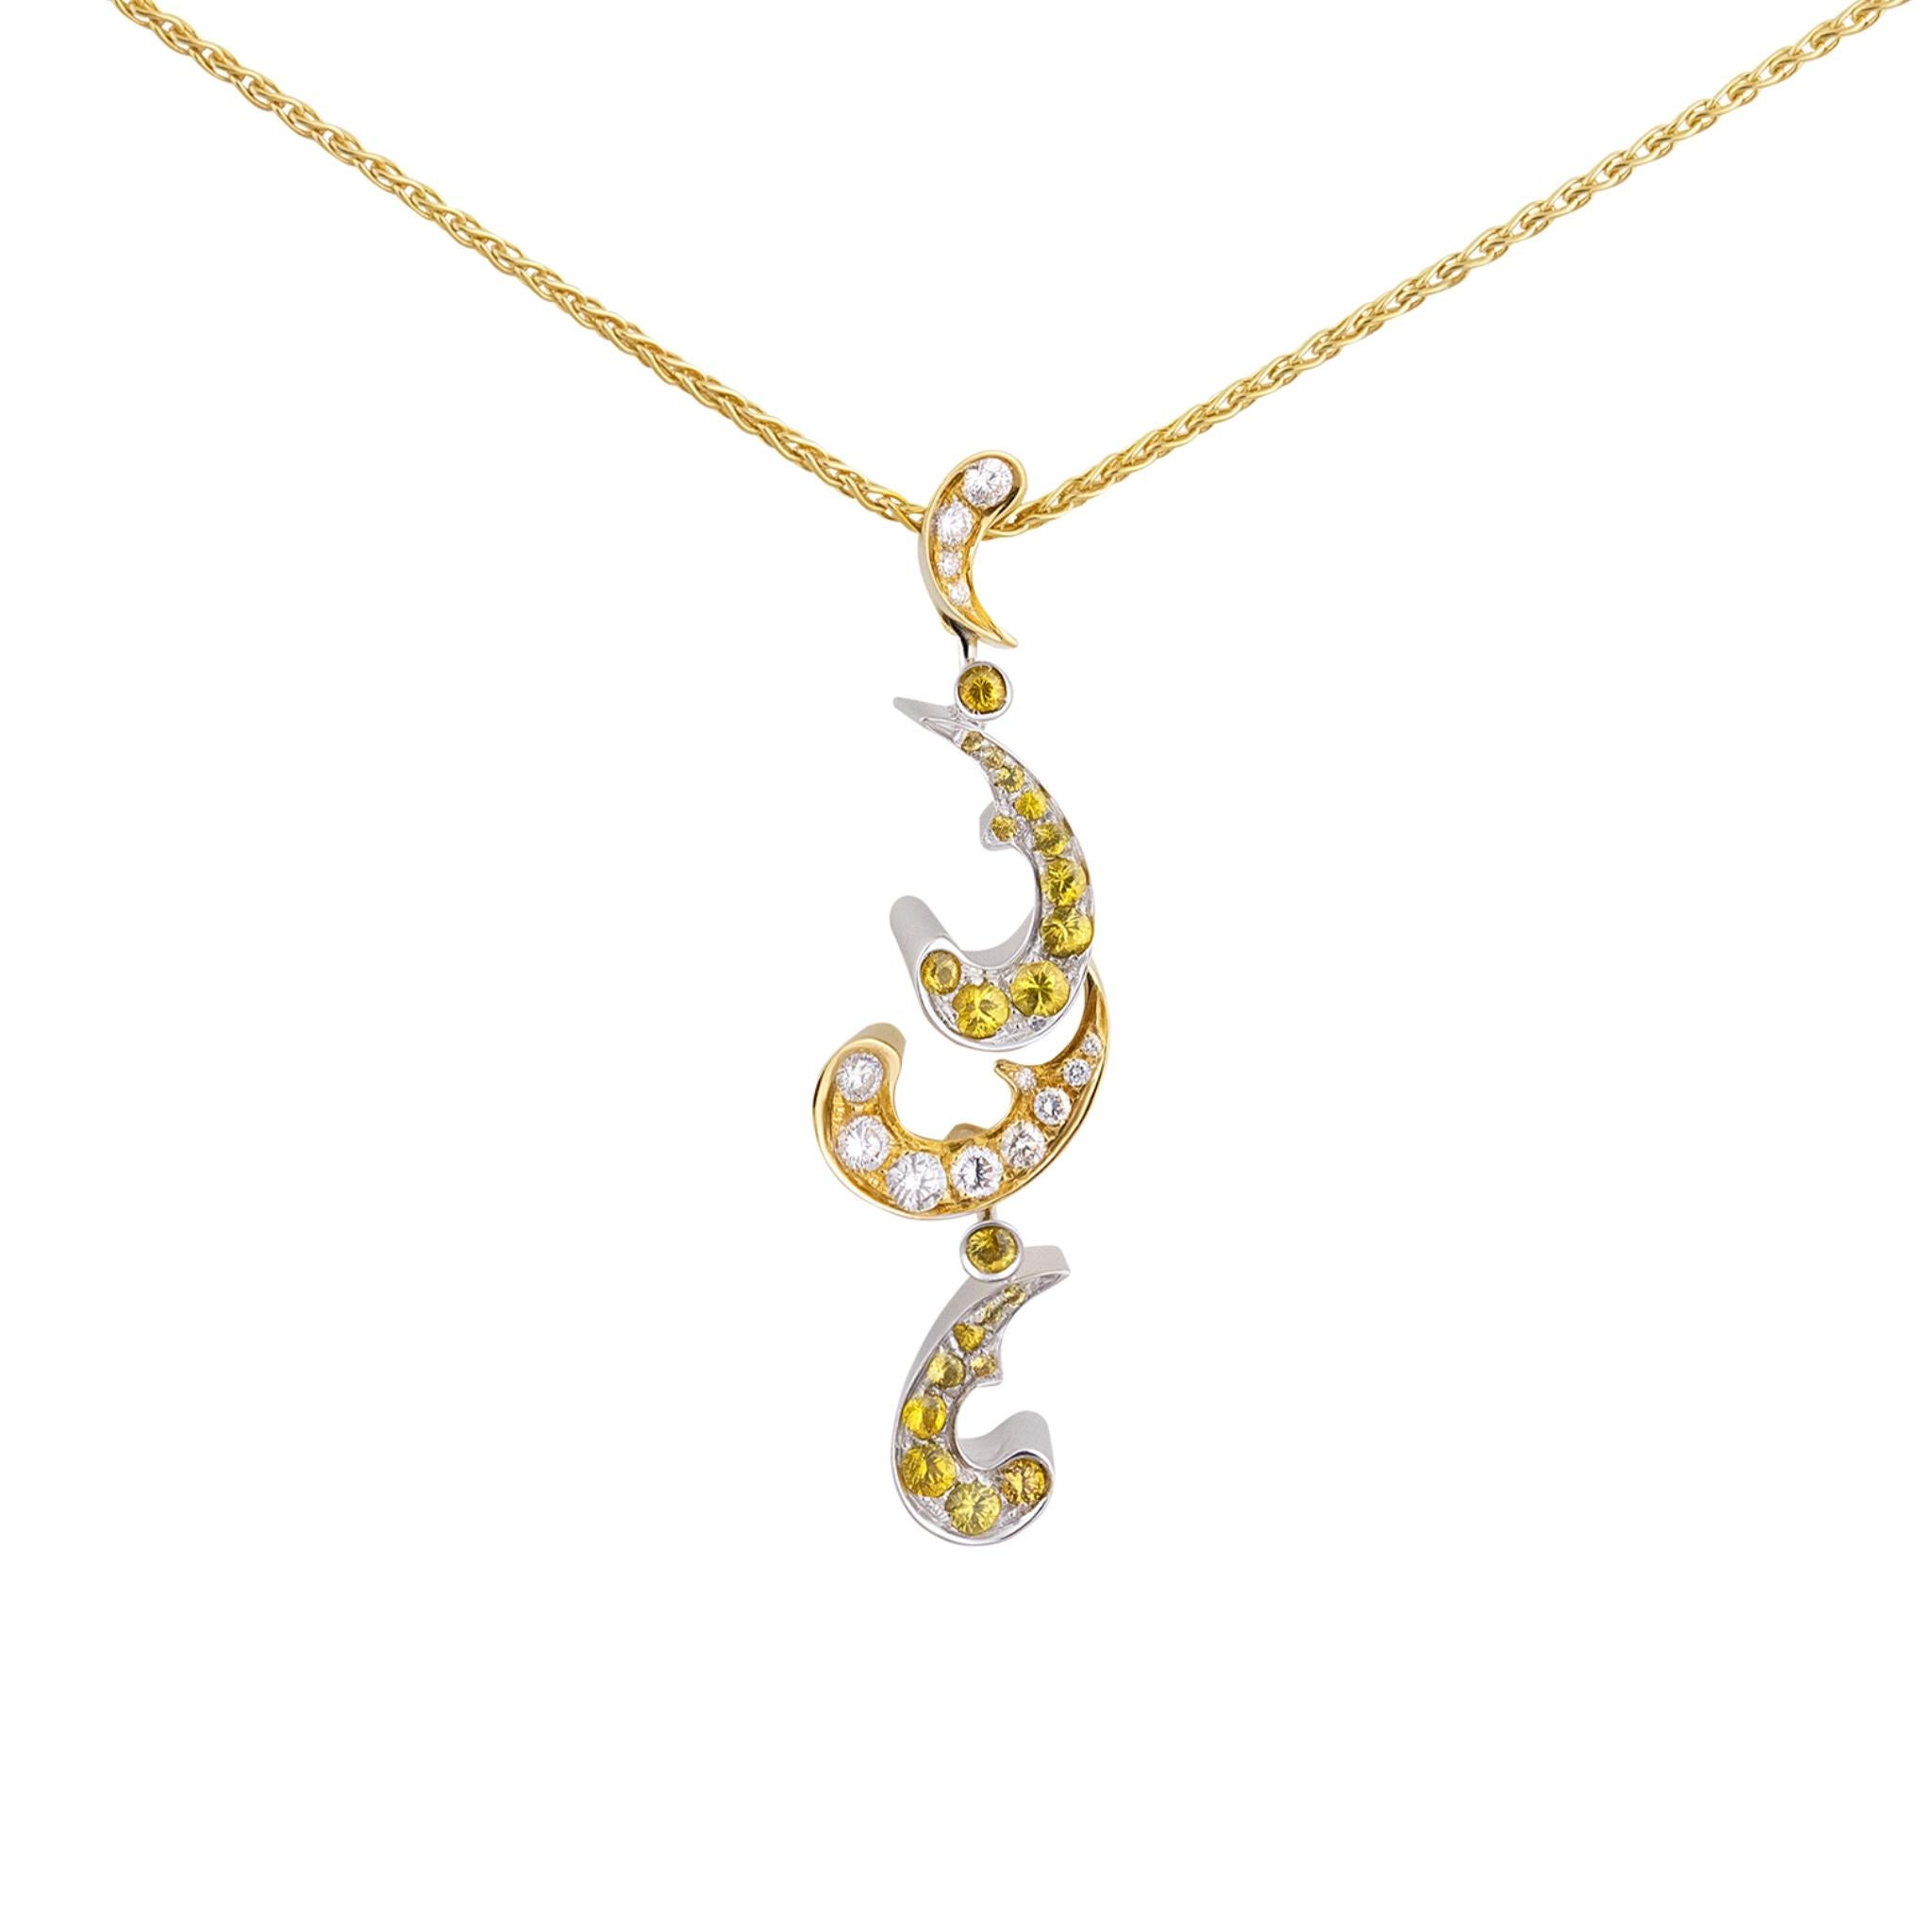 IO SI by Stefan Hafner Necklace
18K White Gold
Diamond: 0.53ctw
Sapphire: 1.03ctw
Italian made
Retail price: $10,150.00
SKU: BLU01898